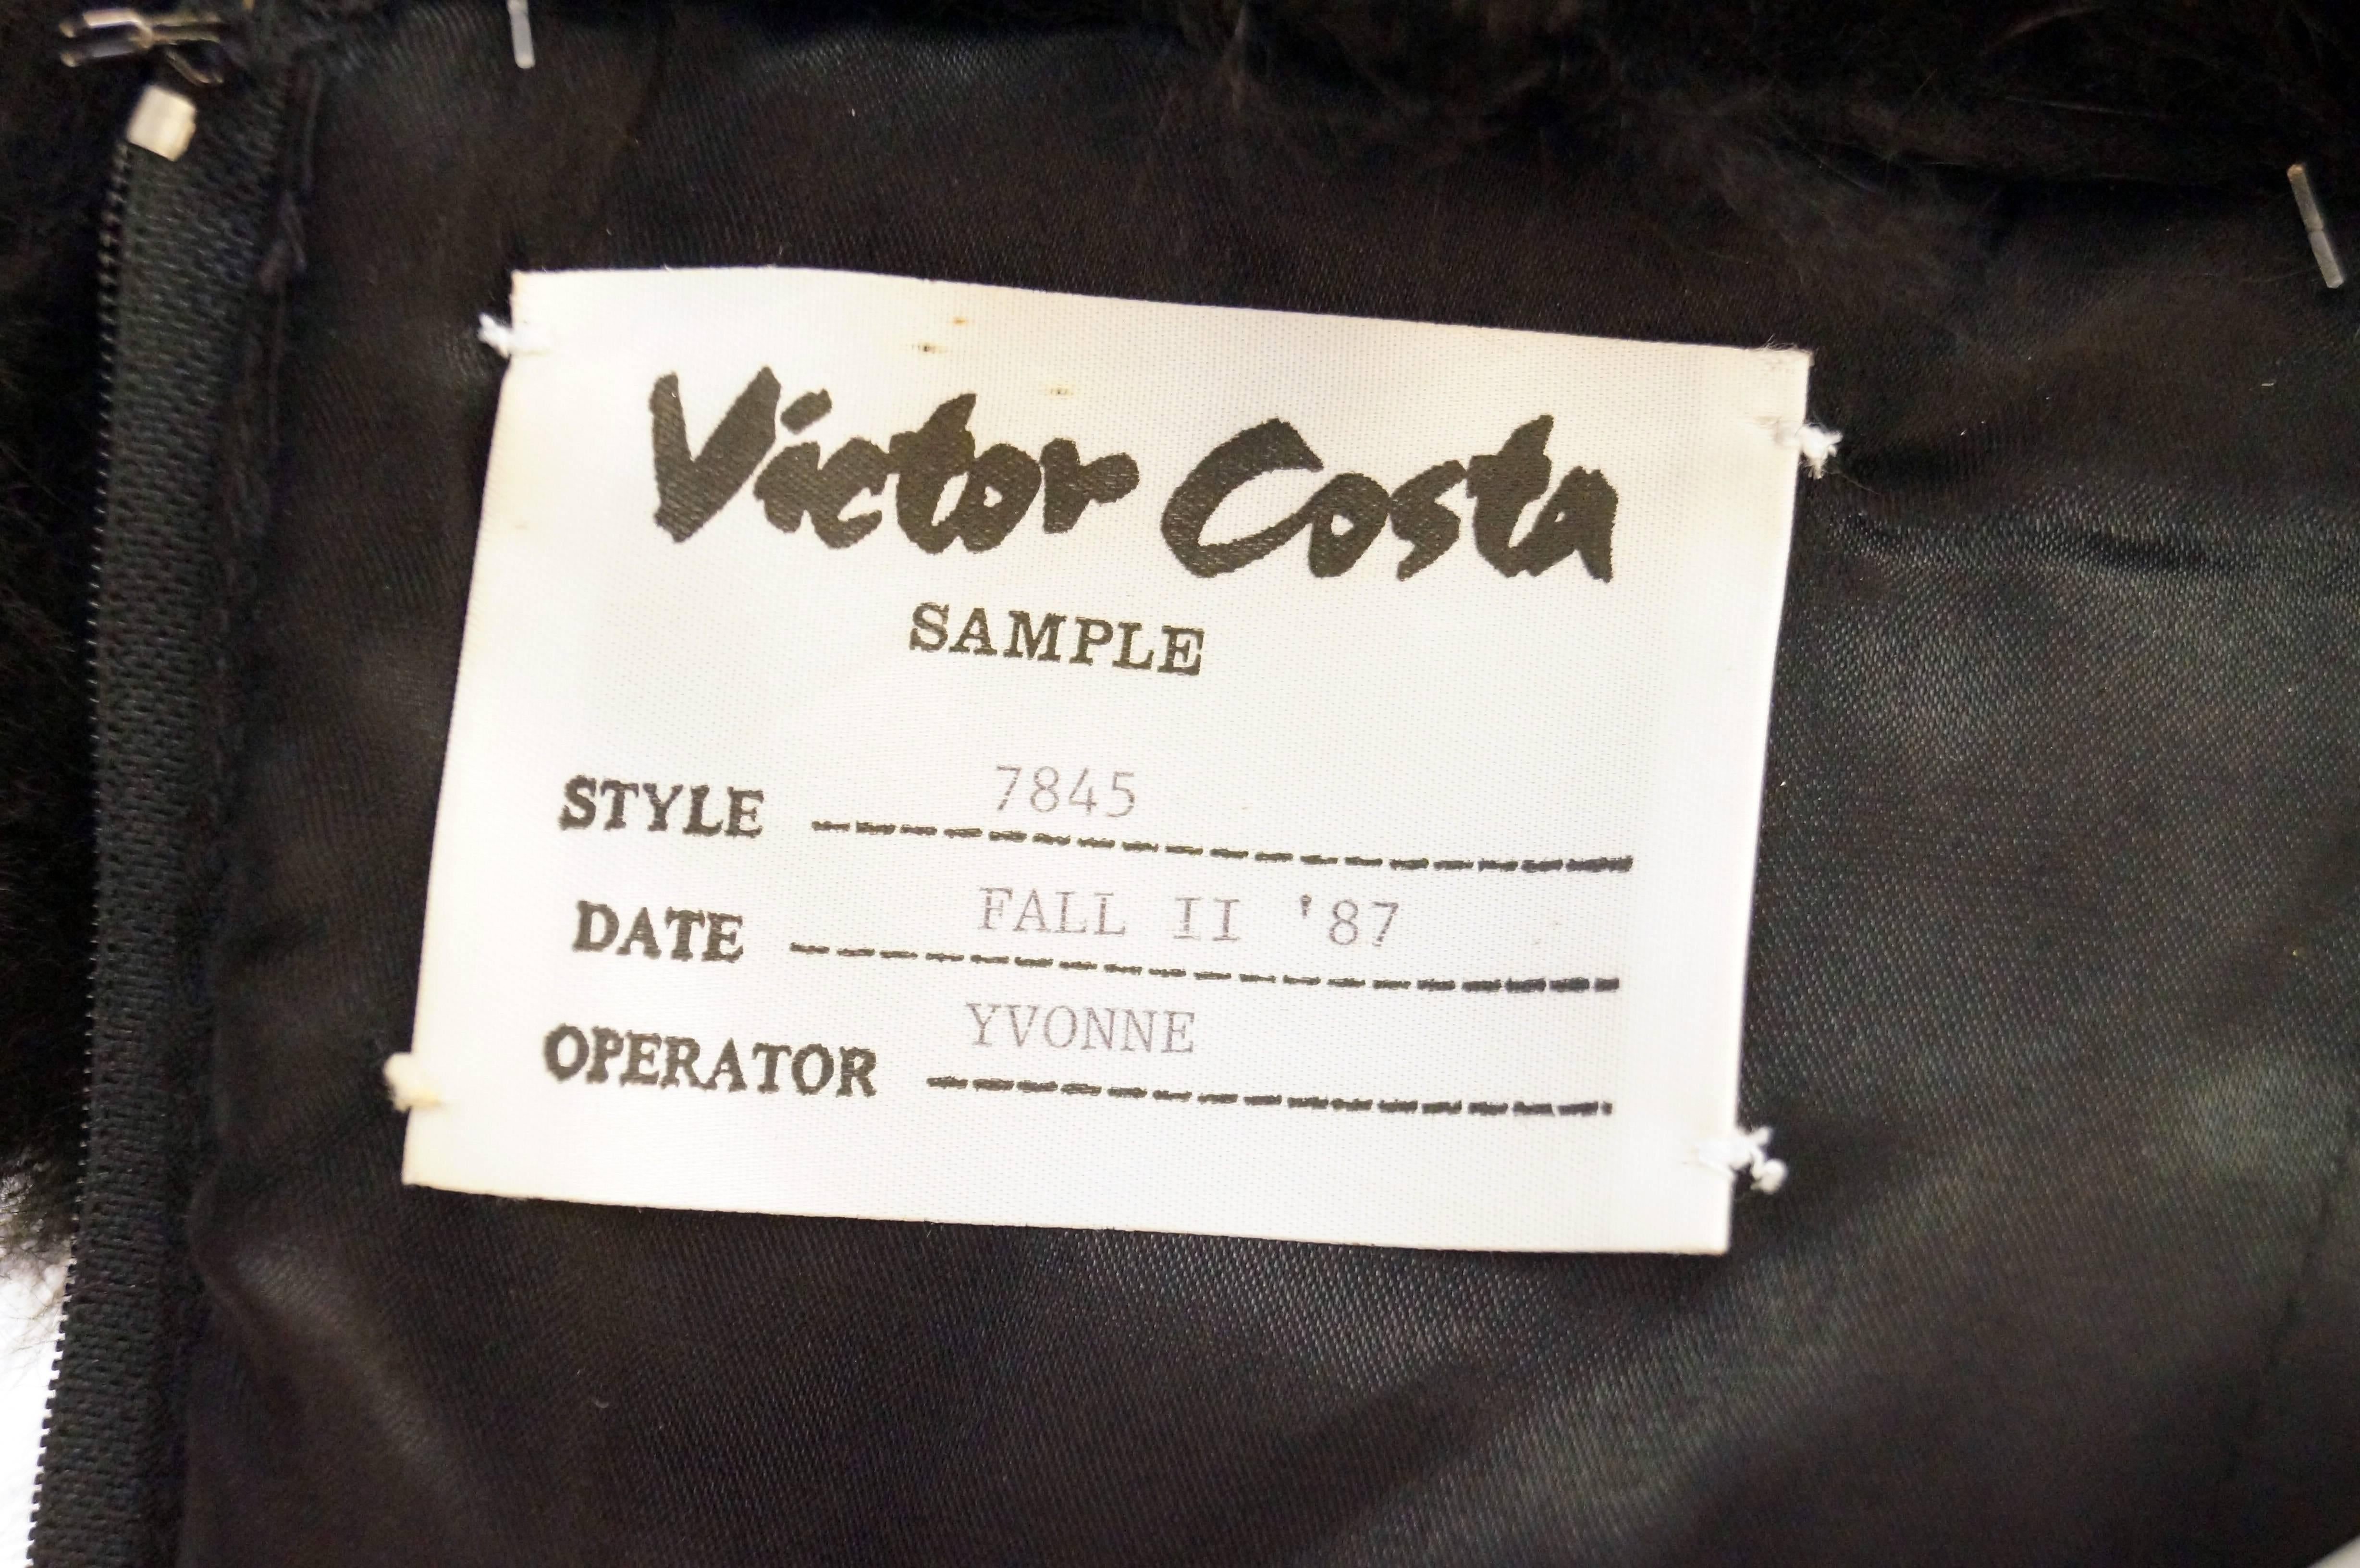 1987 NWT Sample Victor Costa Black Velvet, Fur, Sequin Bow Evening Dress Unworn 2